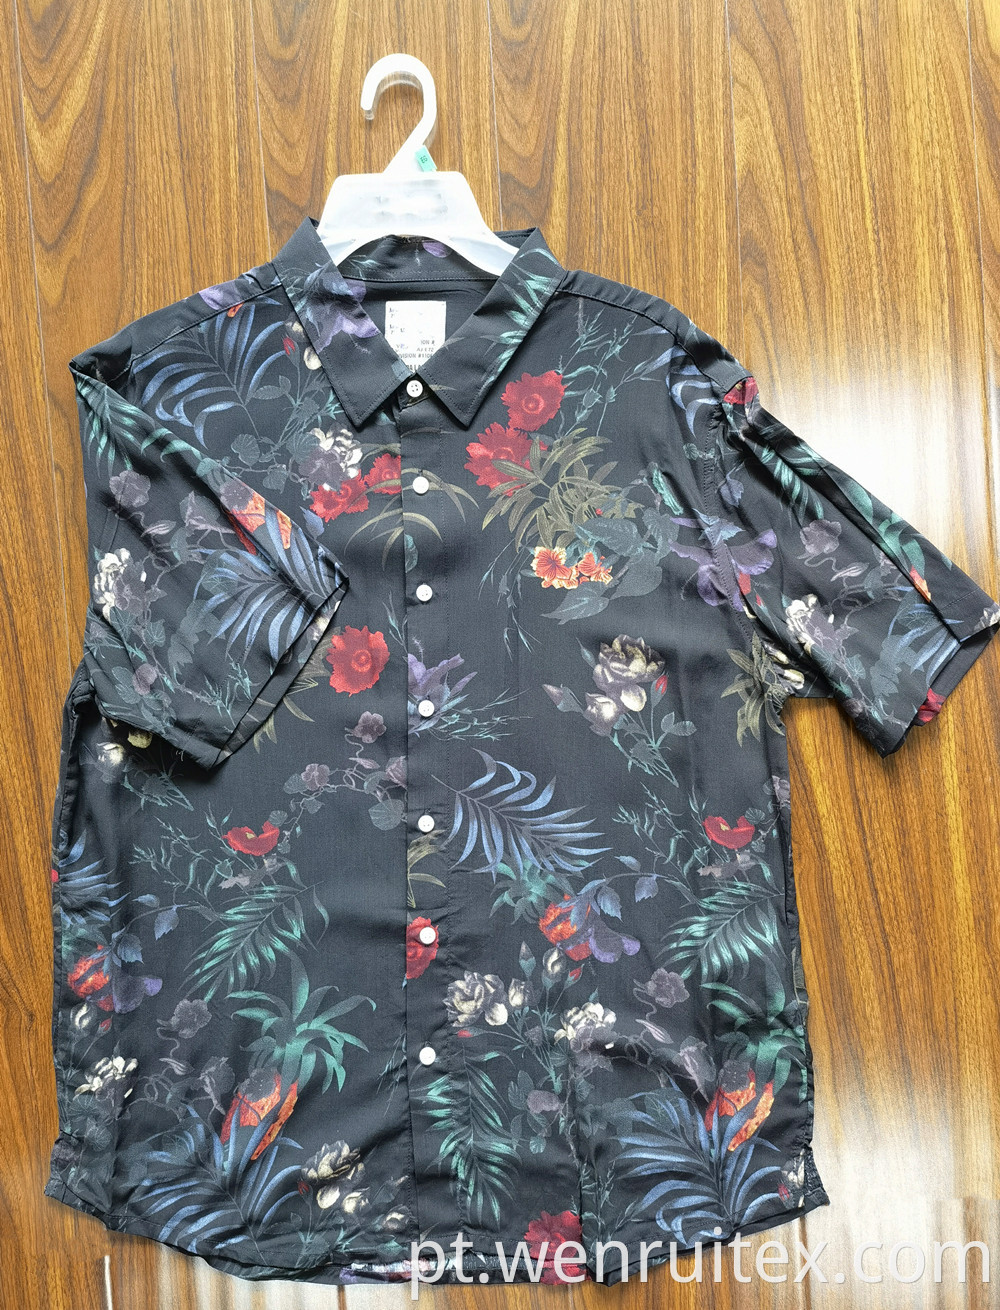 Men S Short Sleeve Shirt Summer Dyed Printed Shirts